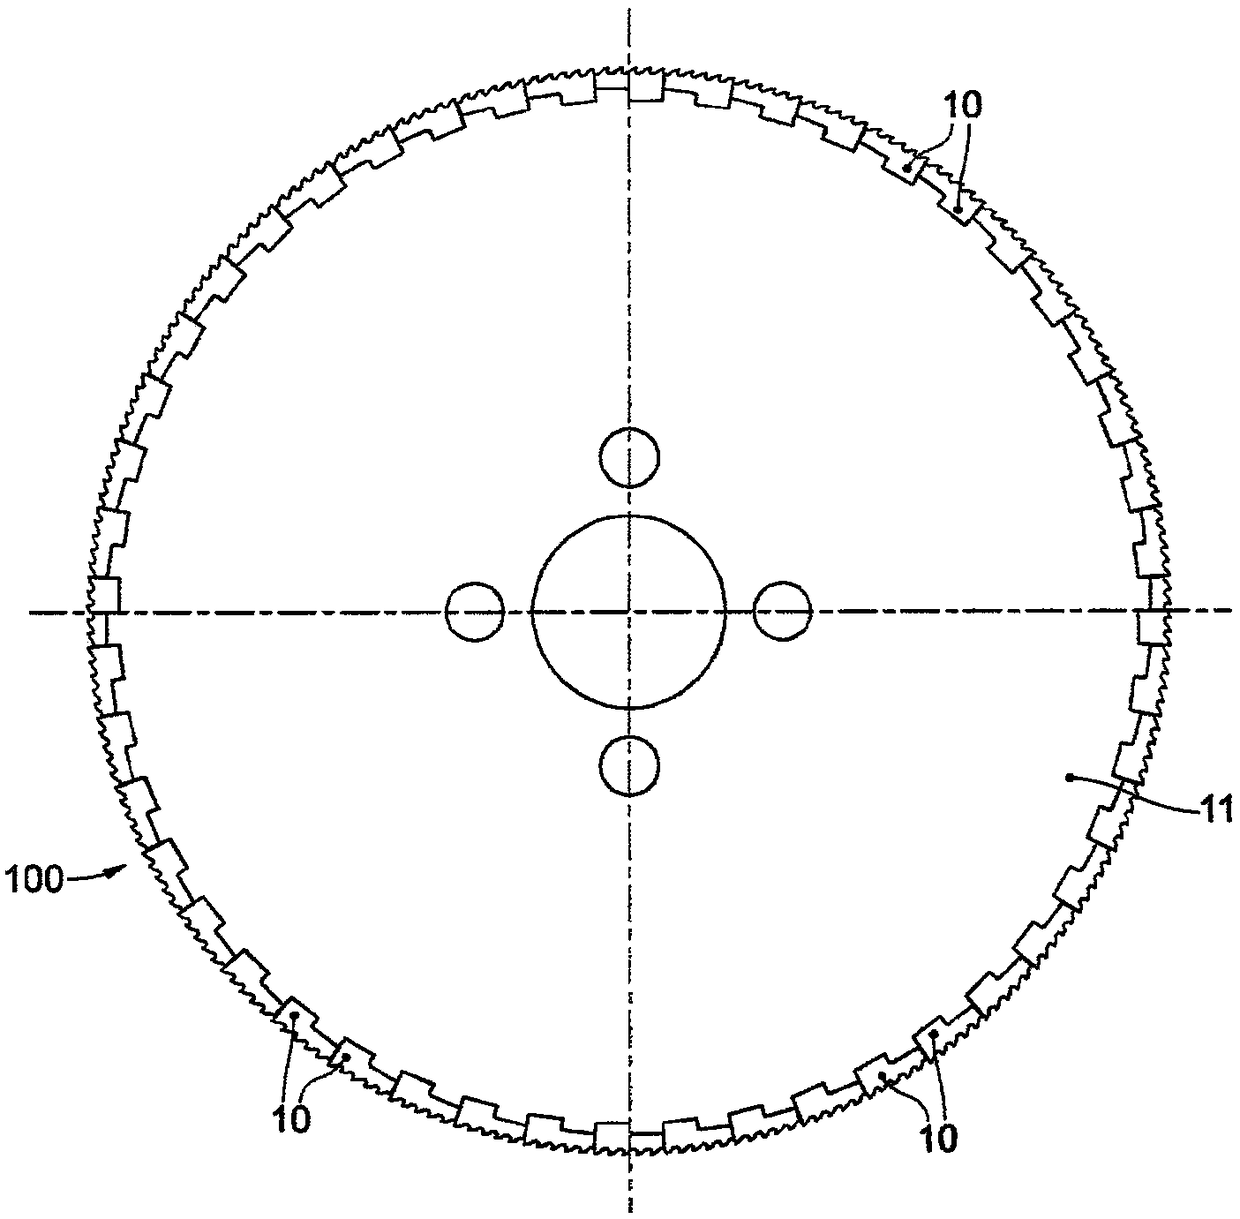 Circular tool for cutting material